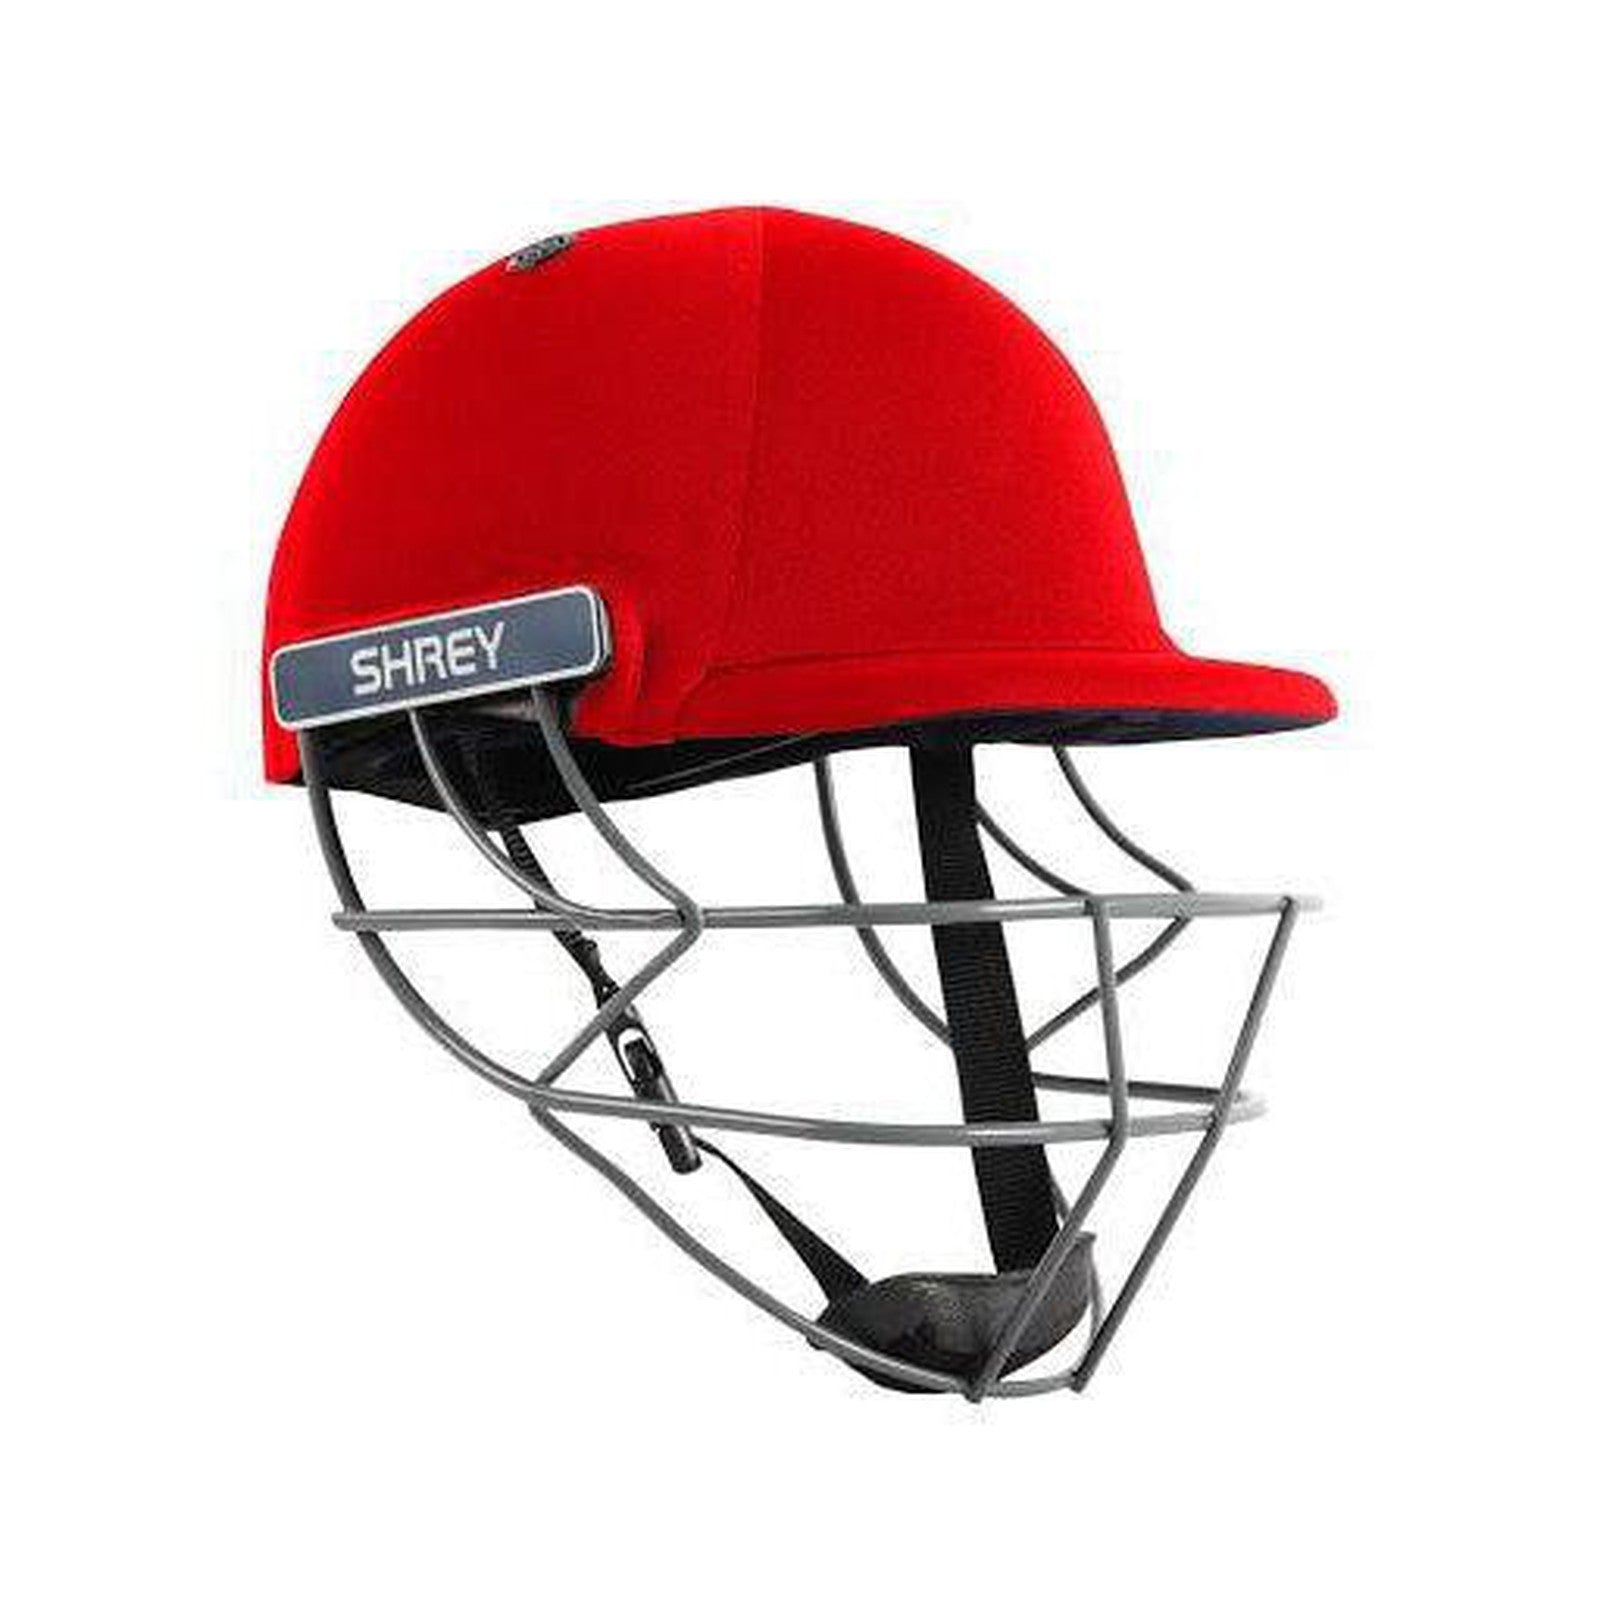 Shrey Performance 2.0 Cricket Helmet With Mild Steel - Red Senior